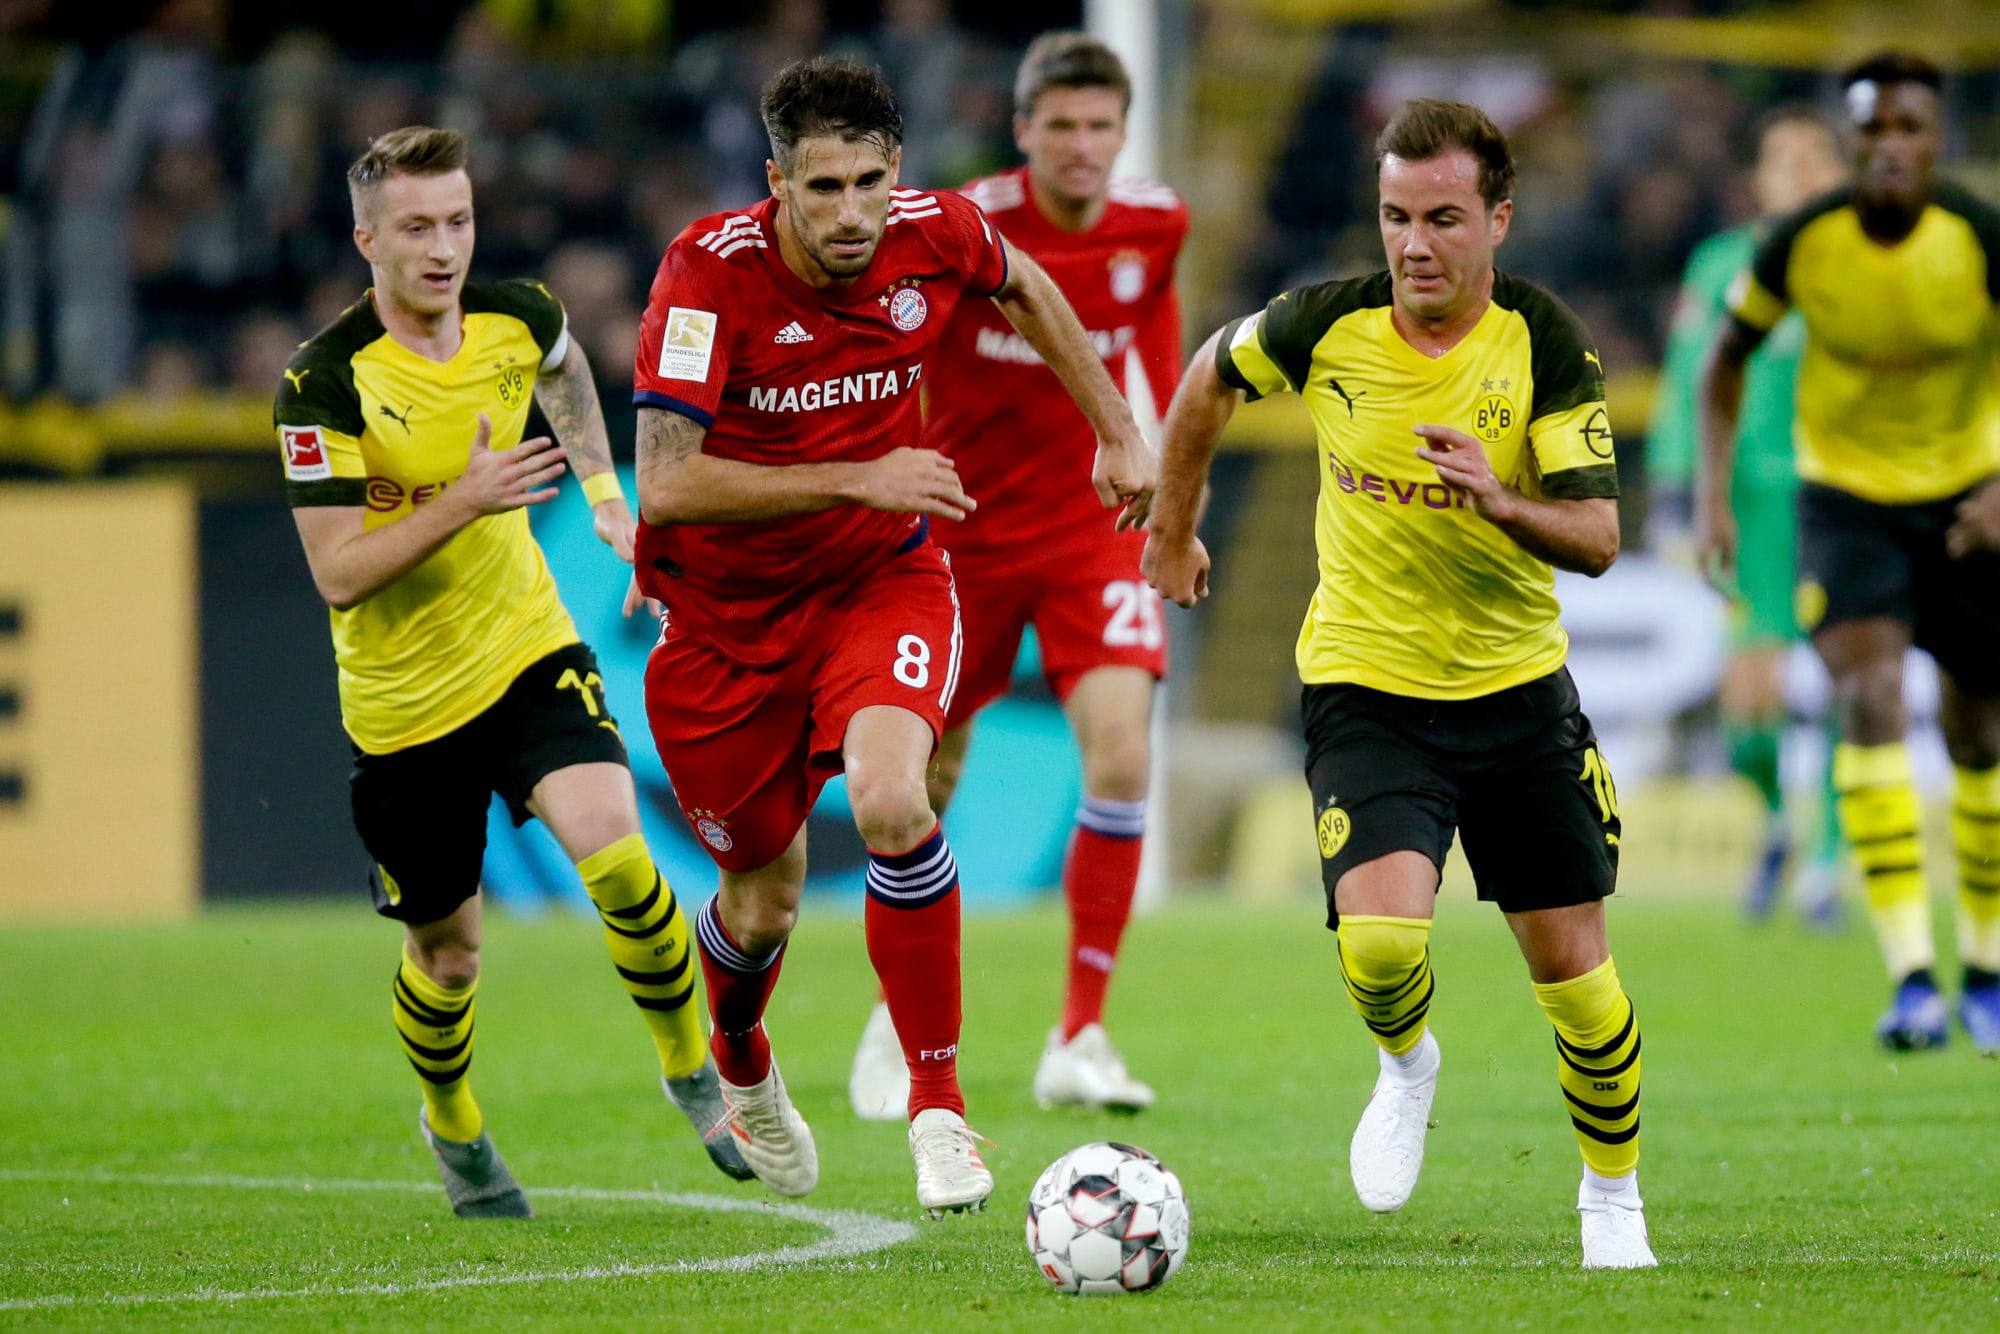 How can I watch Dortmund vs Bayern live?